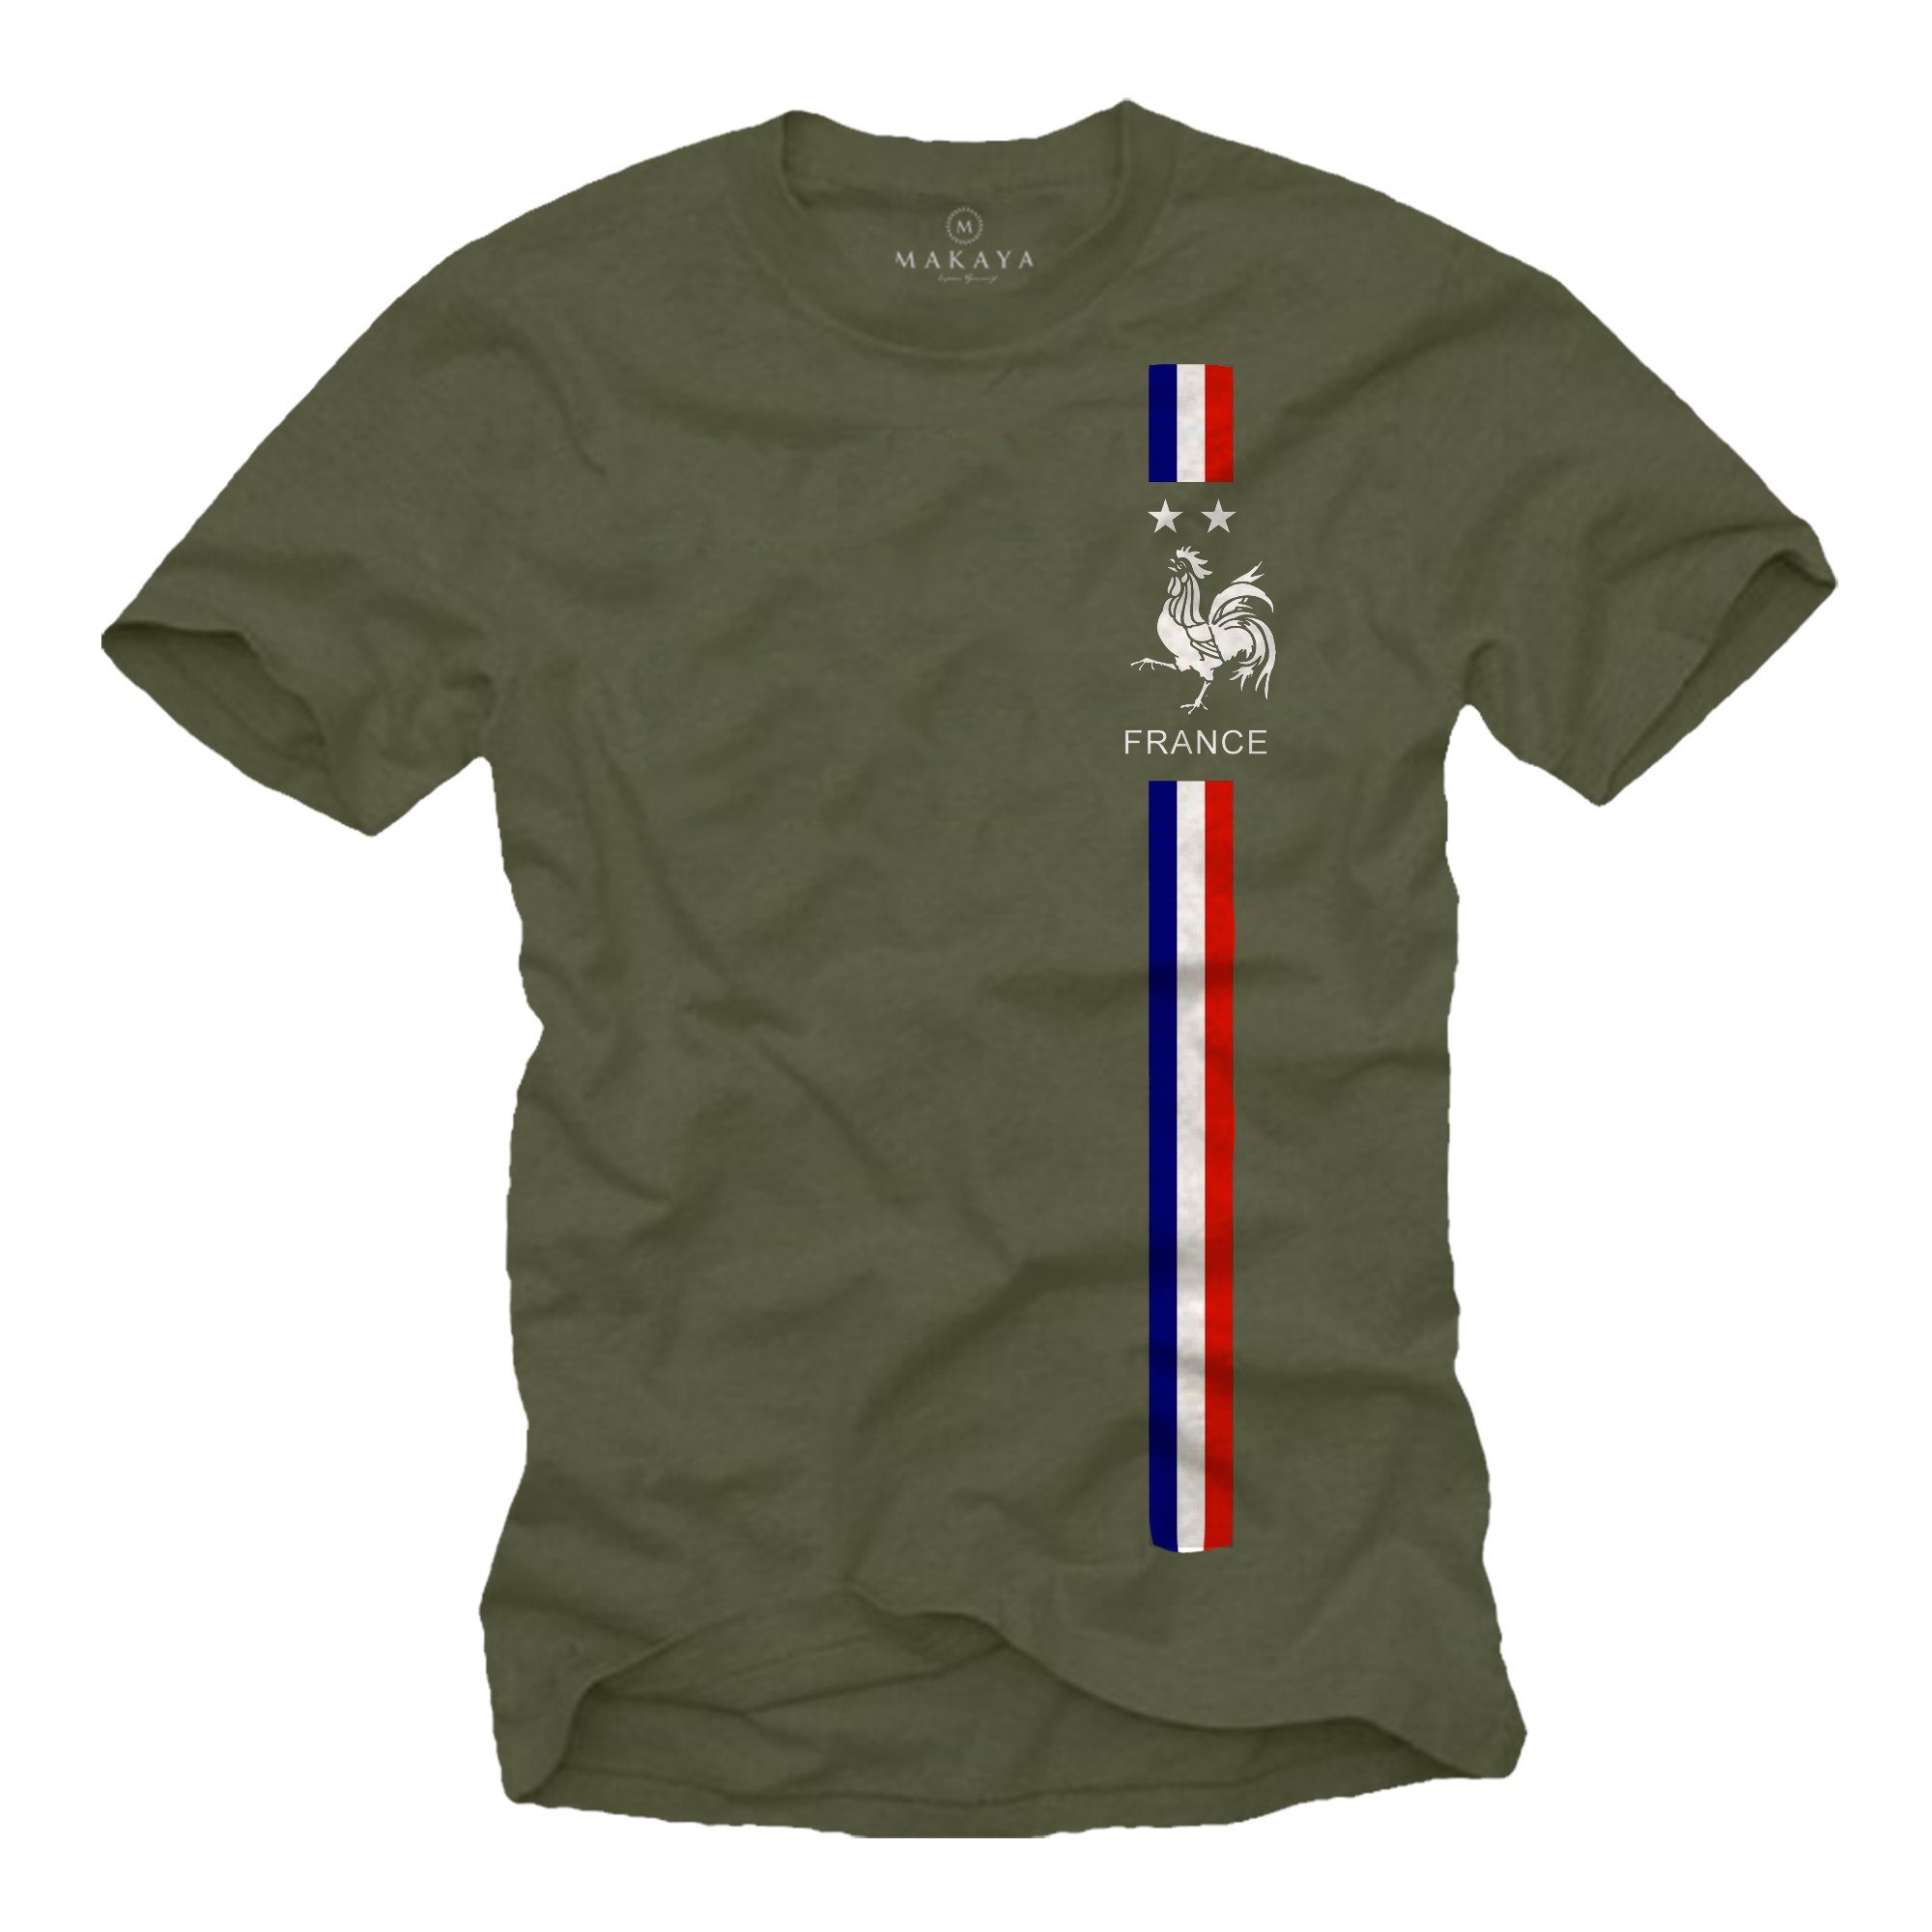 Grün Herren Print-Shirt Fahne Flagge Frankreich MAKAYA Fußball Geschenke Trikot Männer